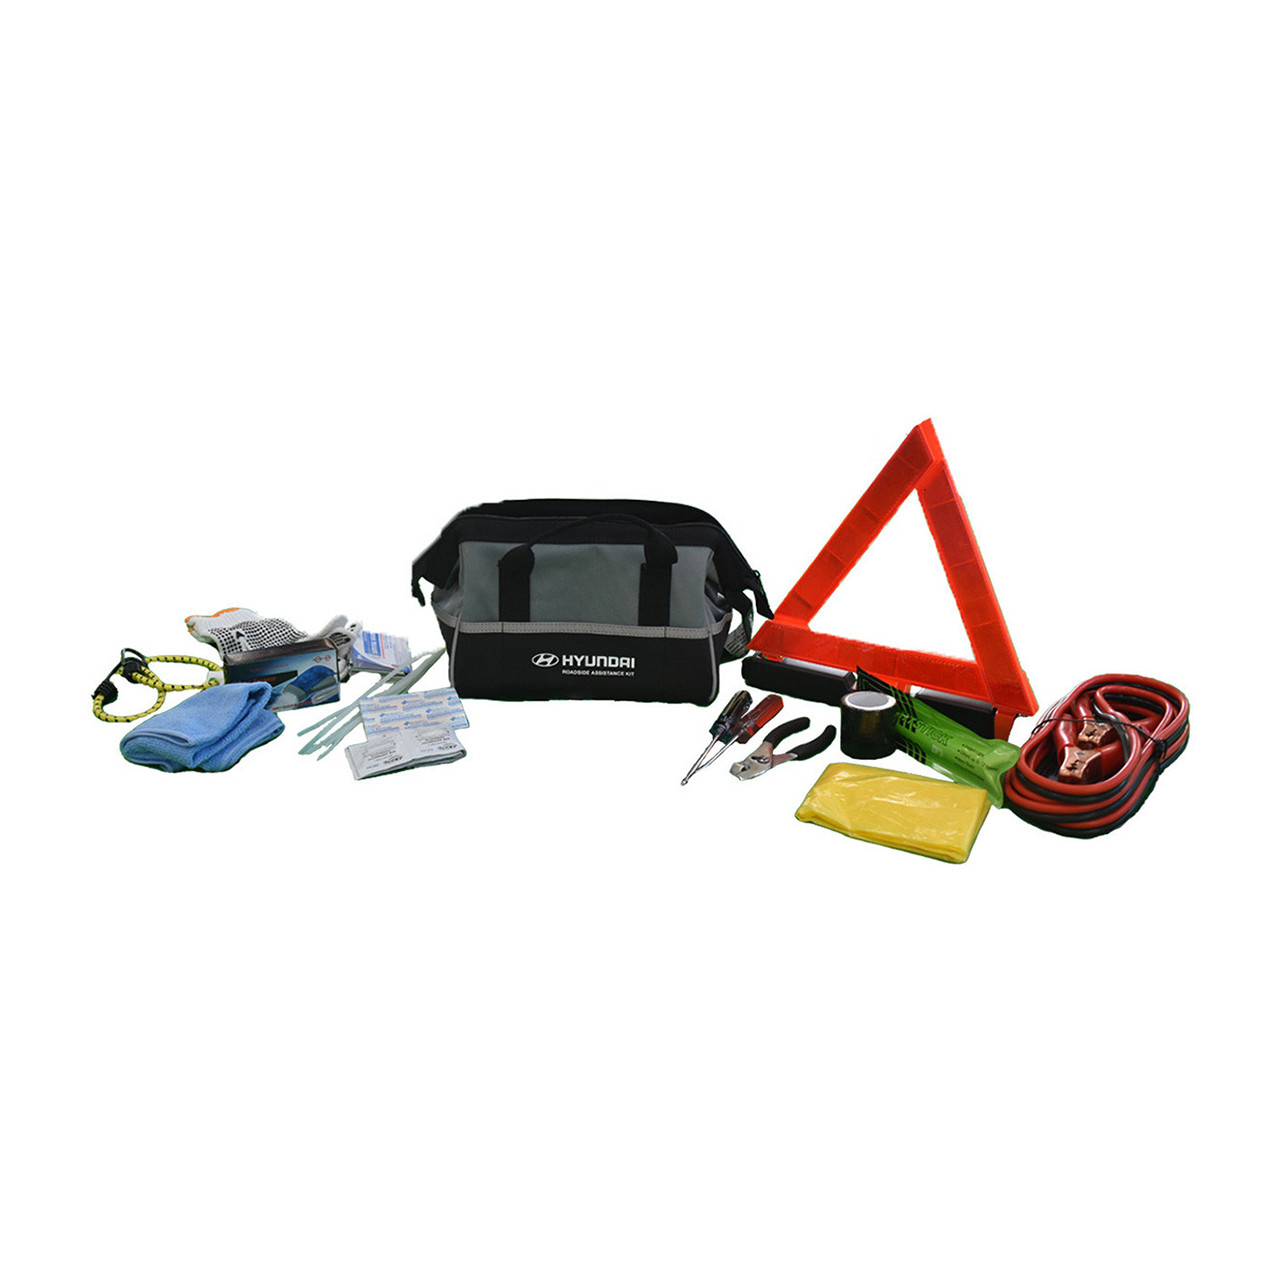 Hyundai Roadside Emergency Kit - Free Shipping